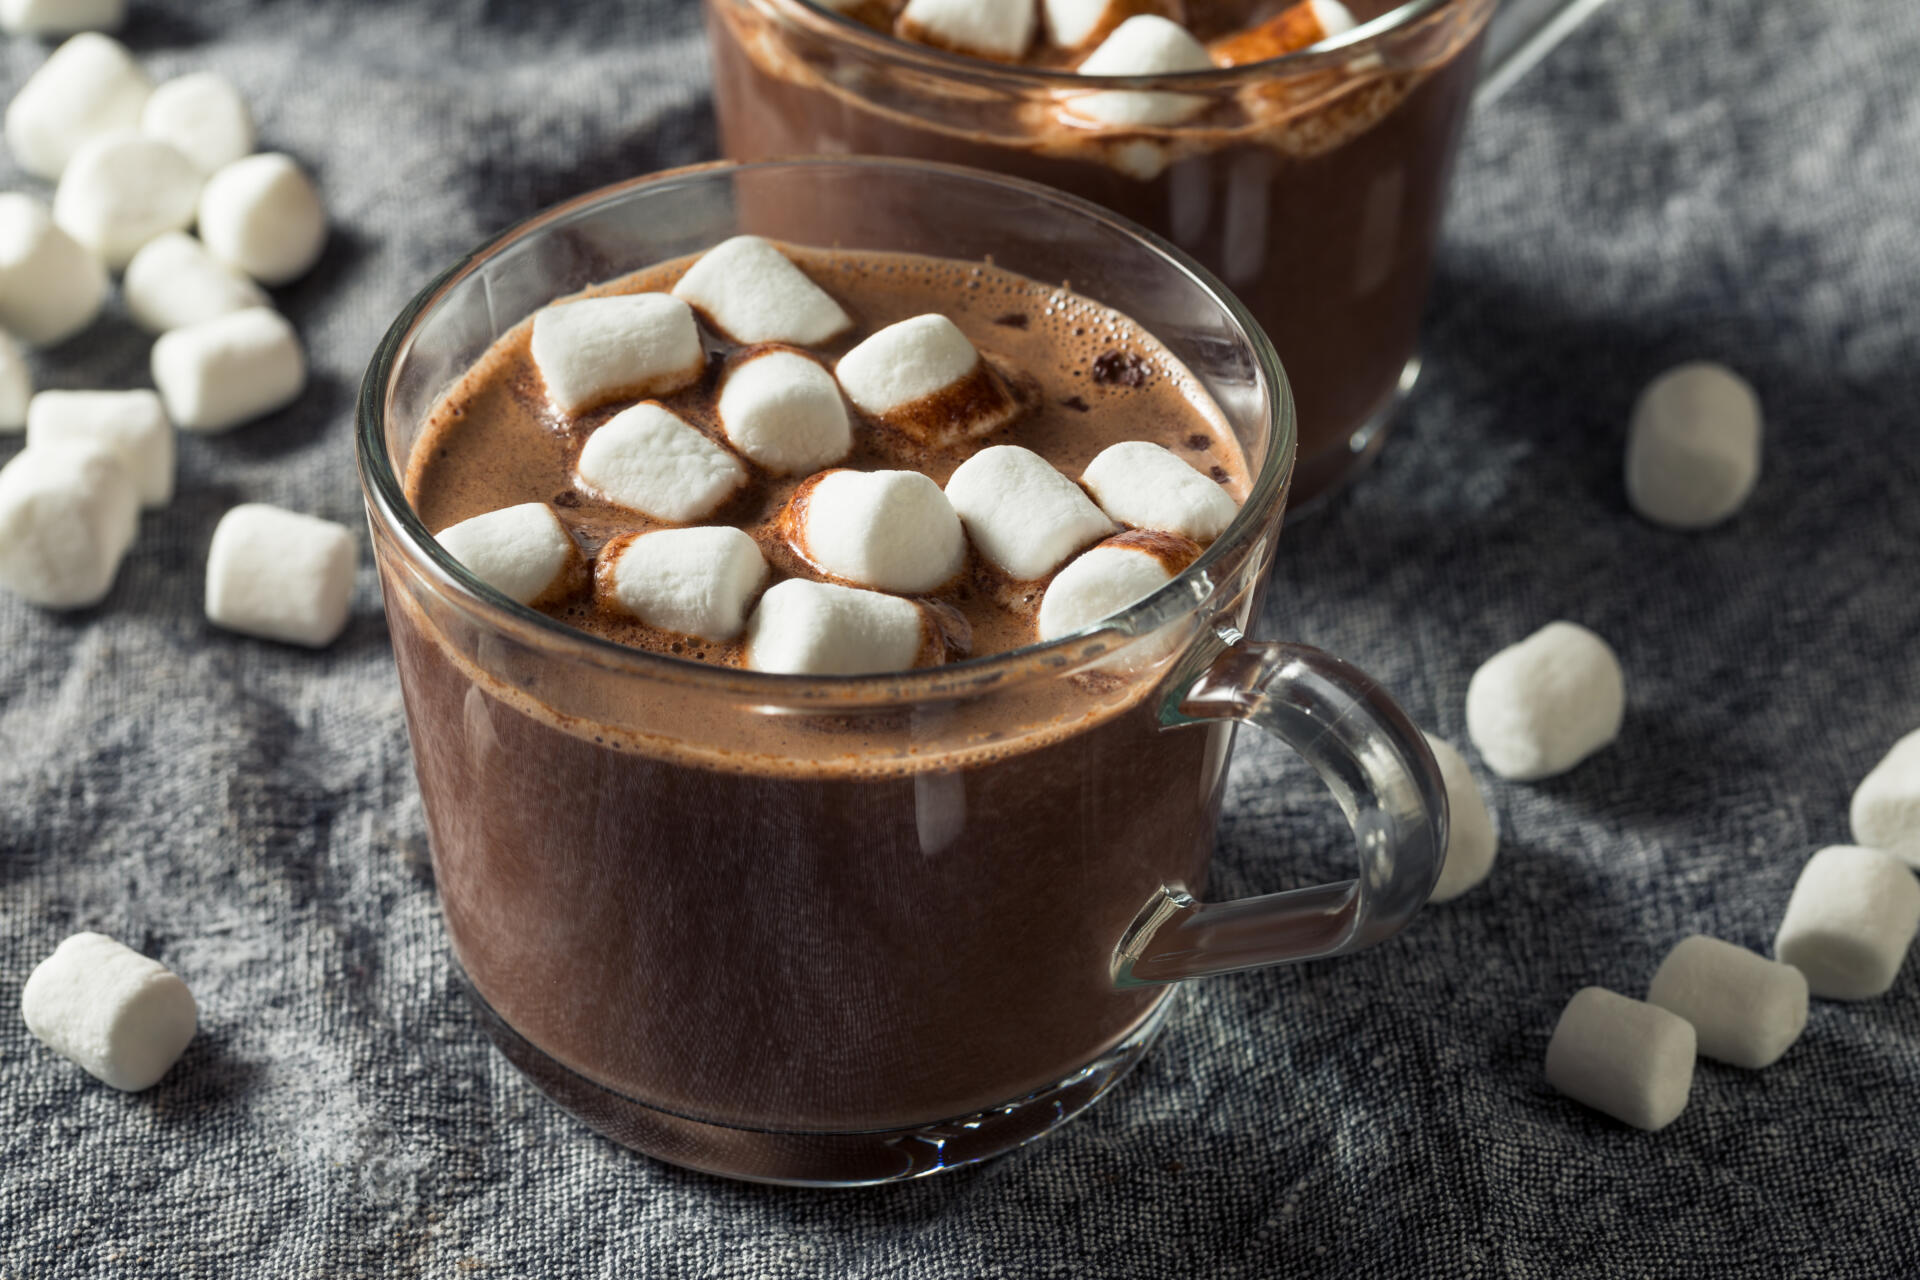 Homemade Warm Hot Chocolate with Mini Marshmallows